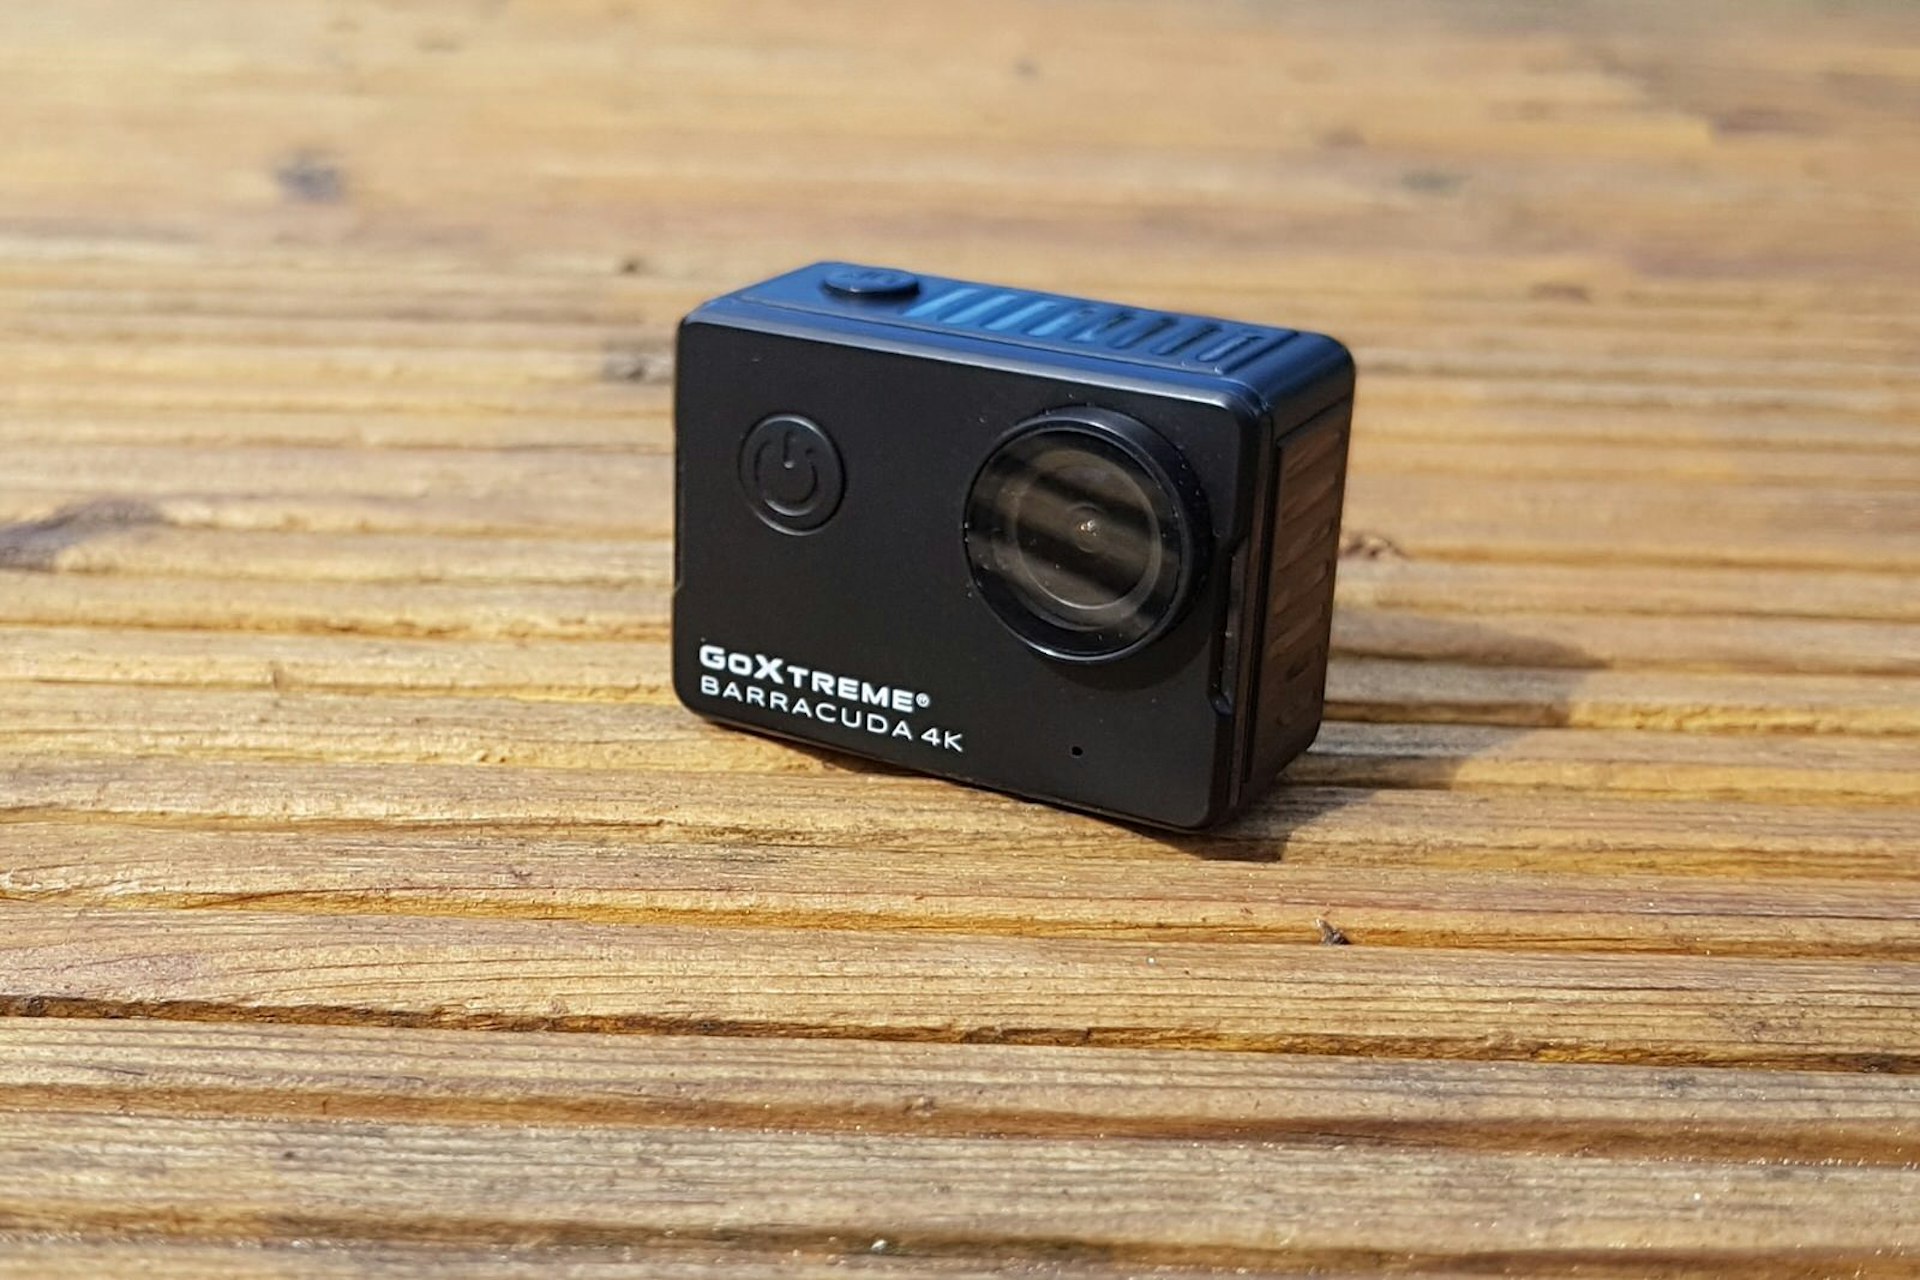 GoXtreme Barracuda, a small, square video camera with a minimalist design 